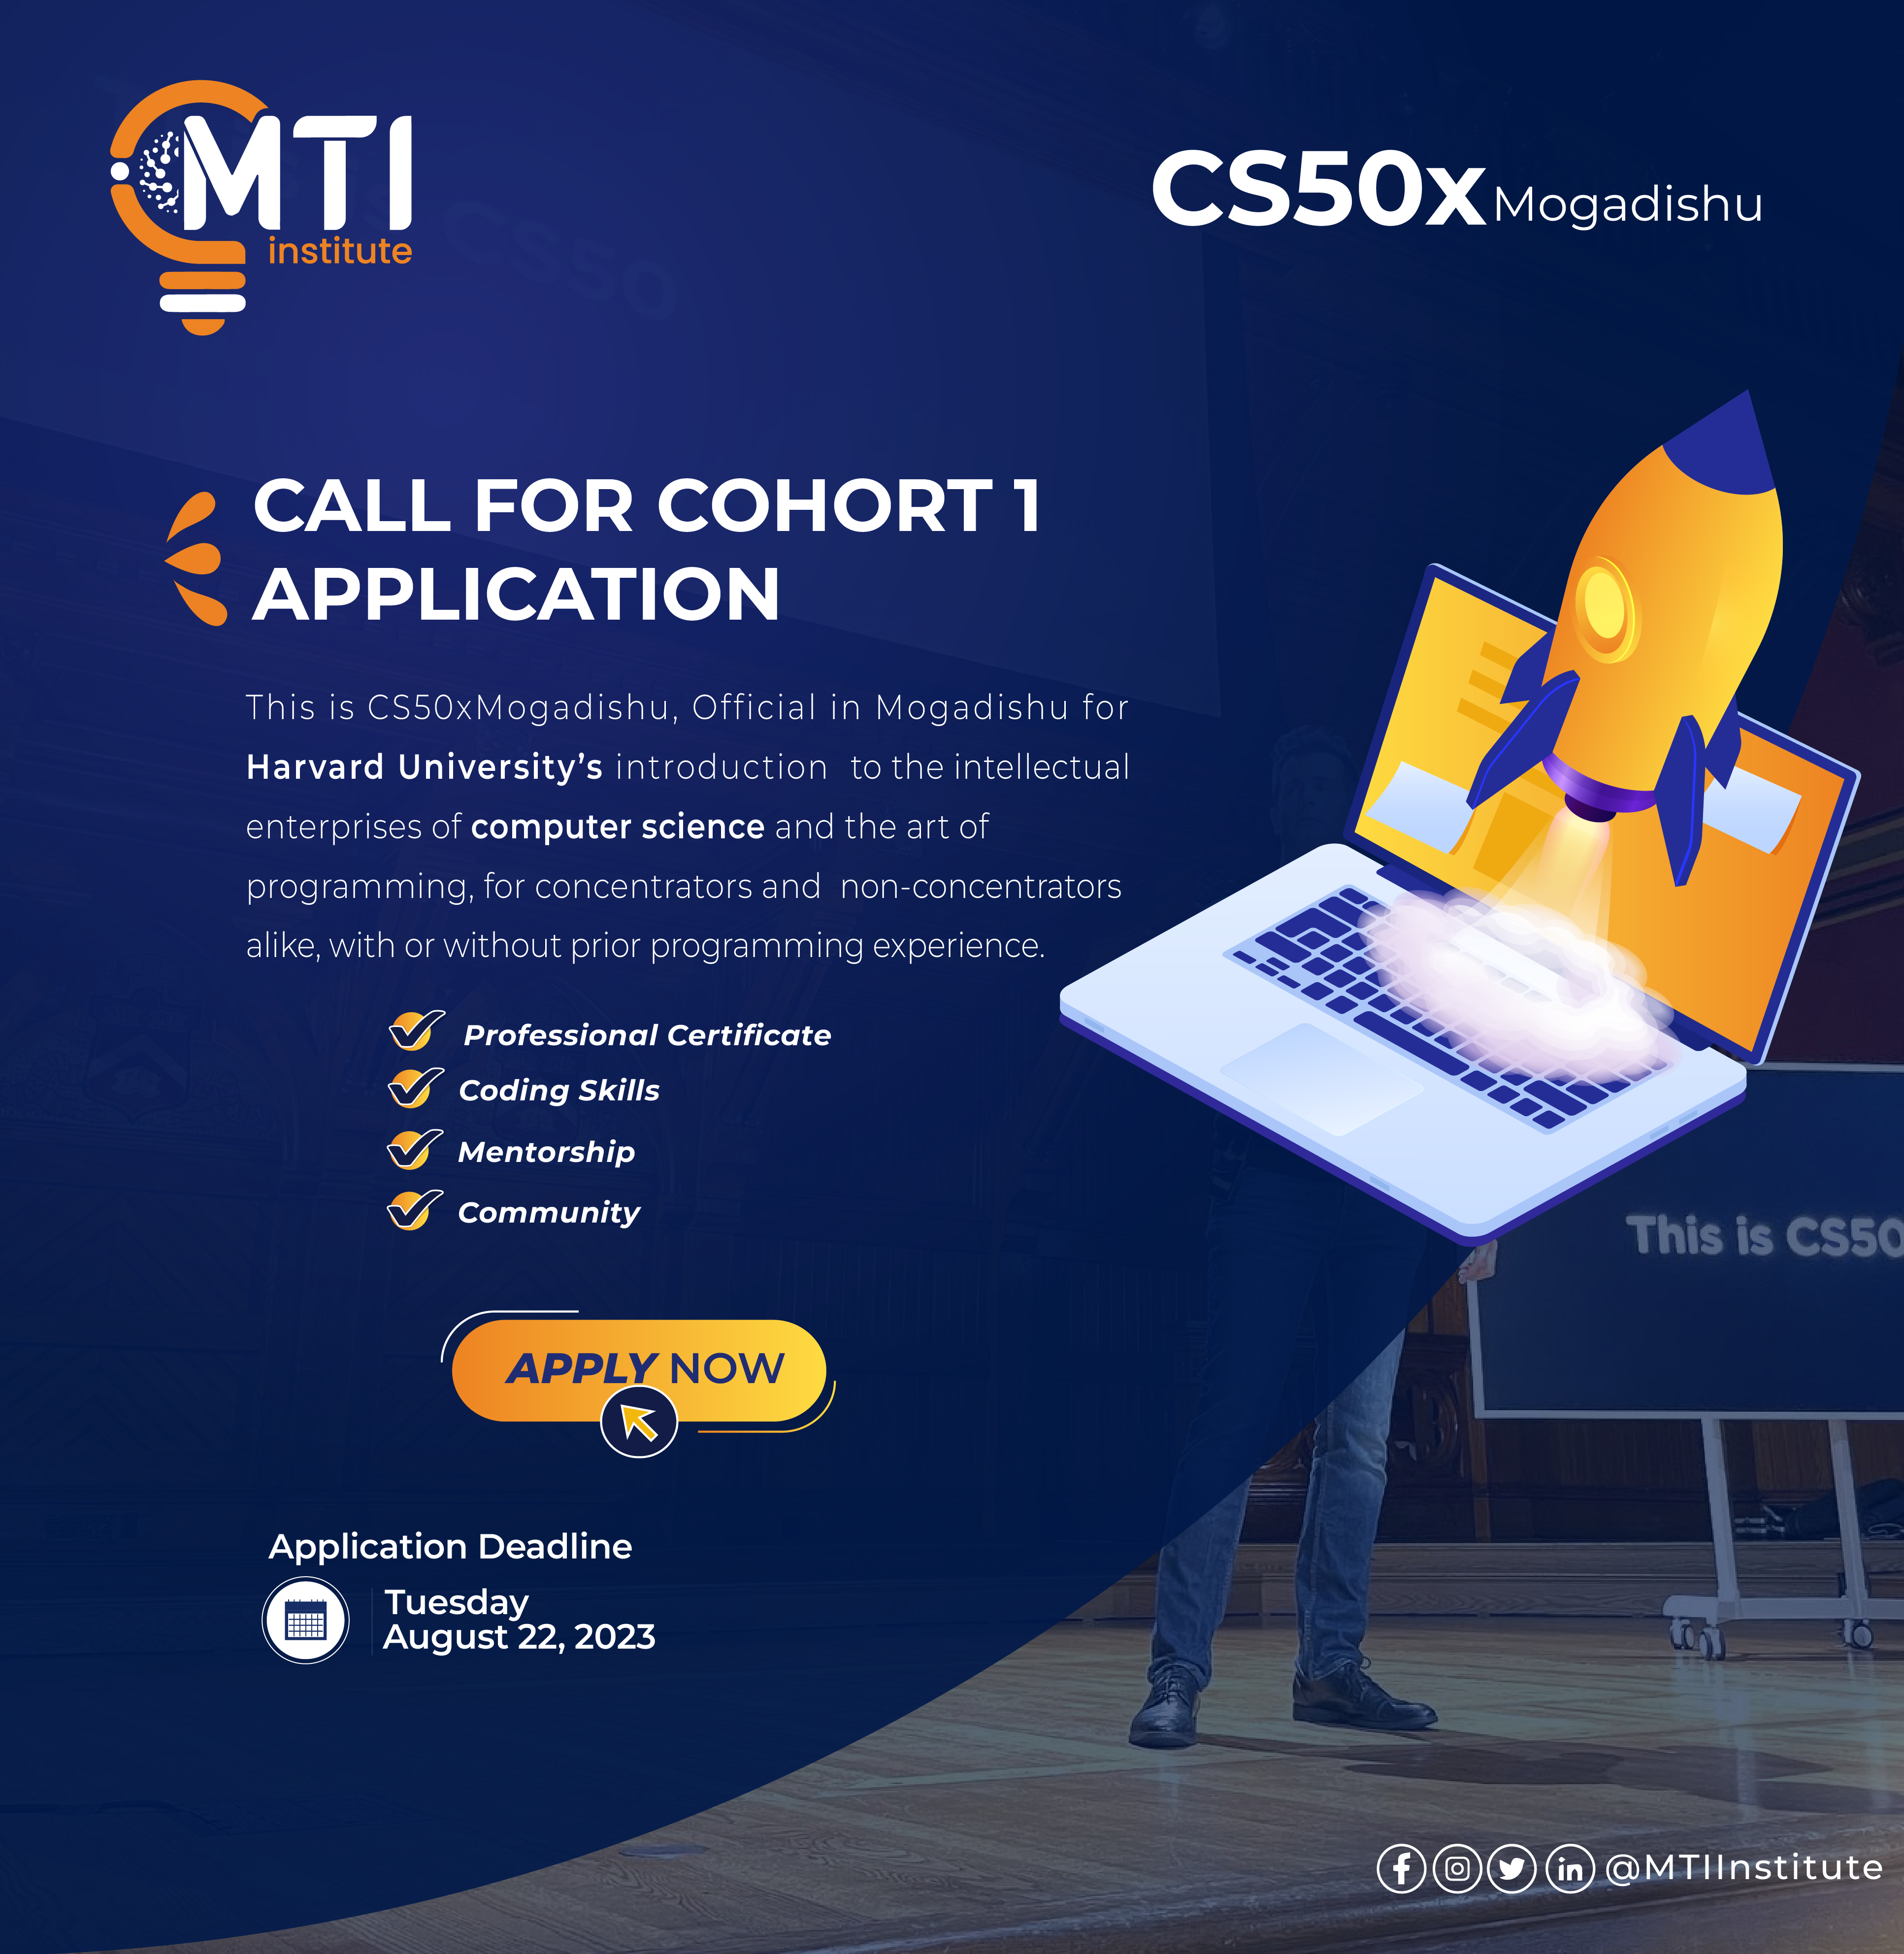 CALL FOR CS50xMogadishu Program Cohort 1 Application